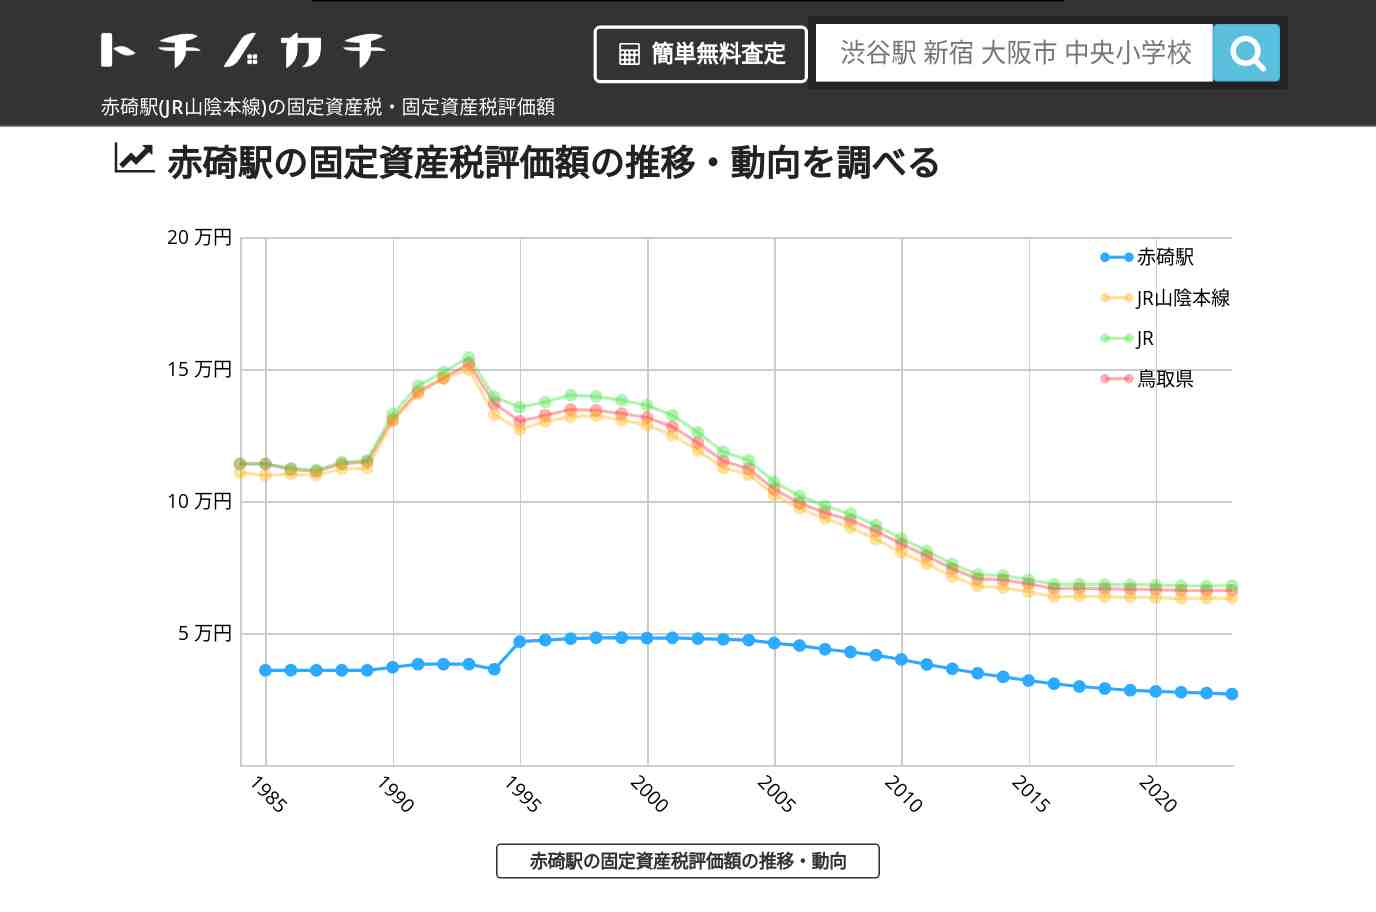 赤碕駅(JR山陰本線)の固定資産税・固定資産税評価額 | トチノカチ